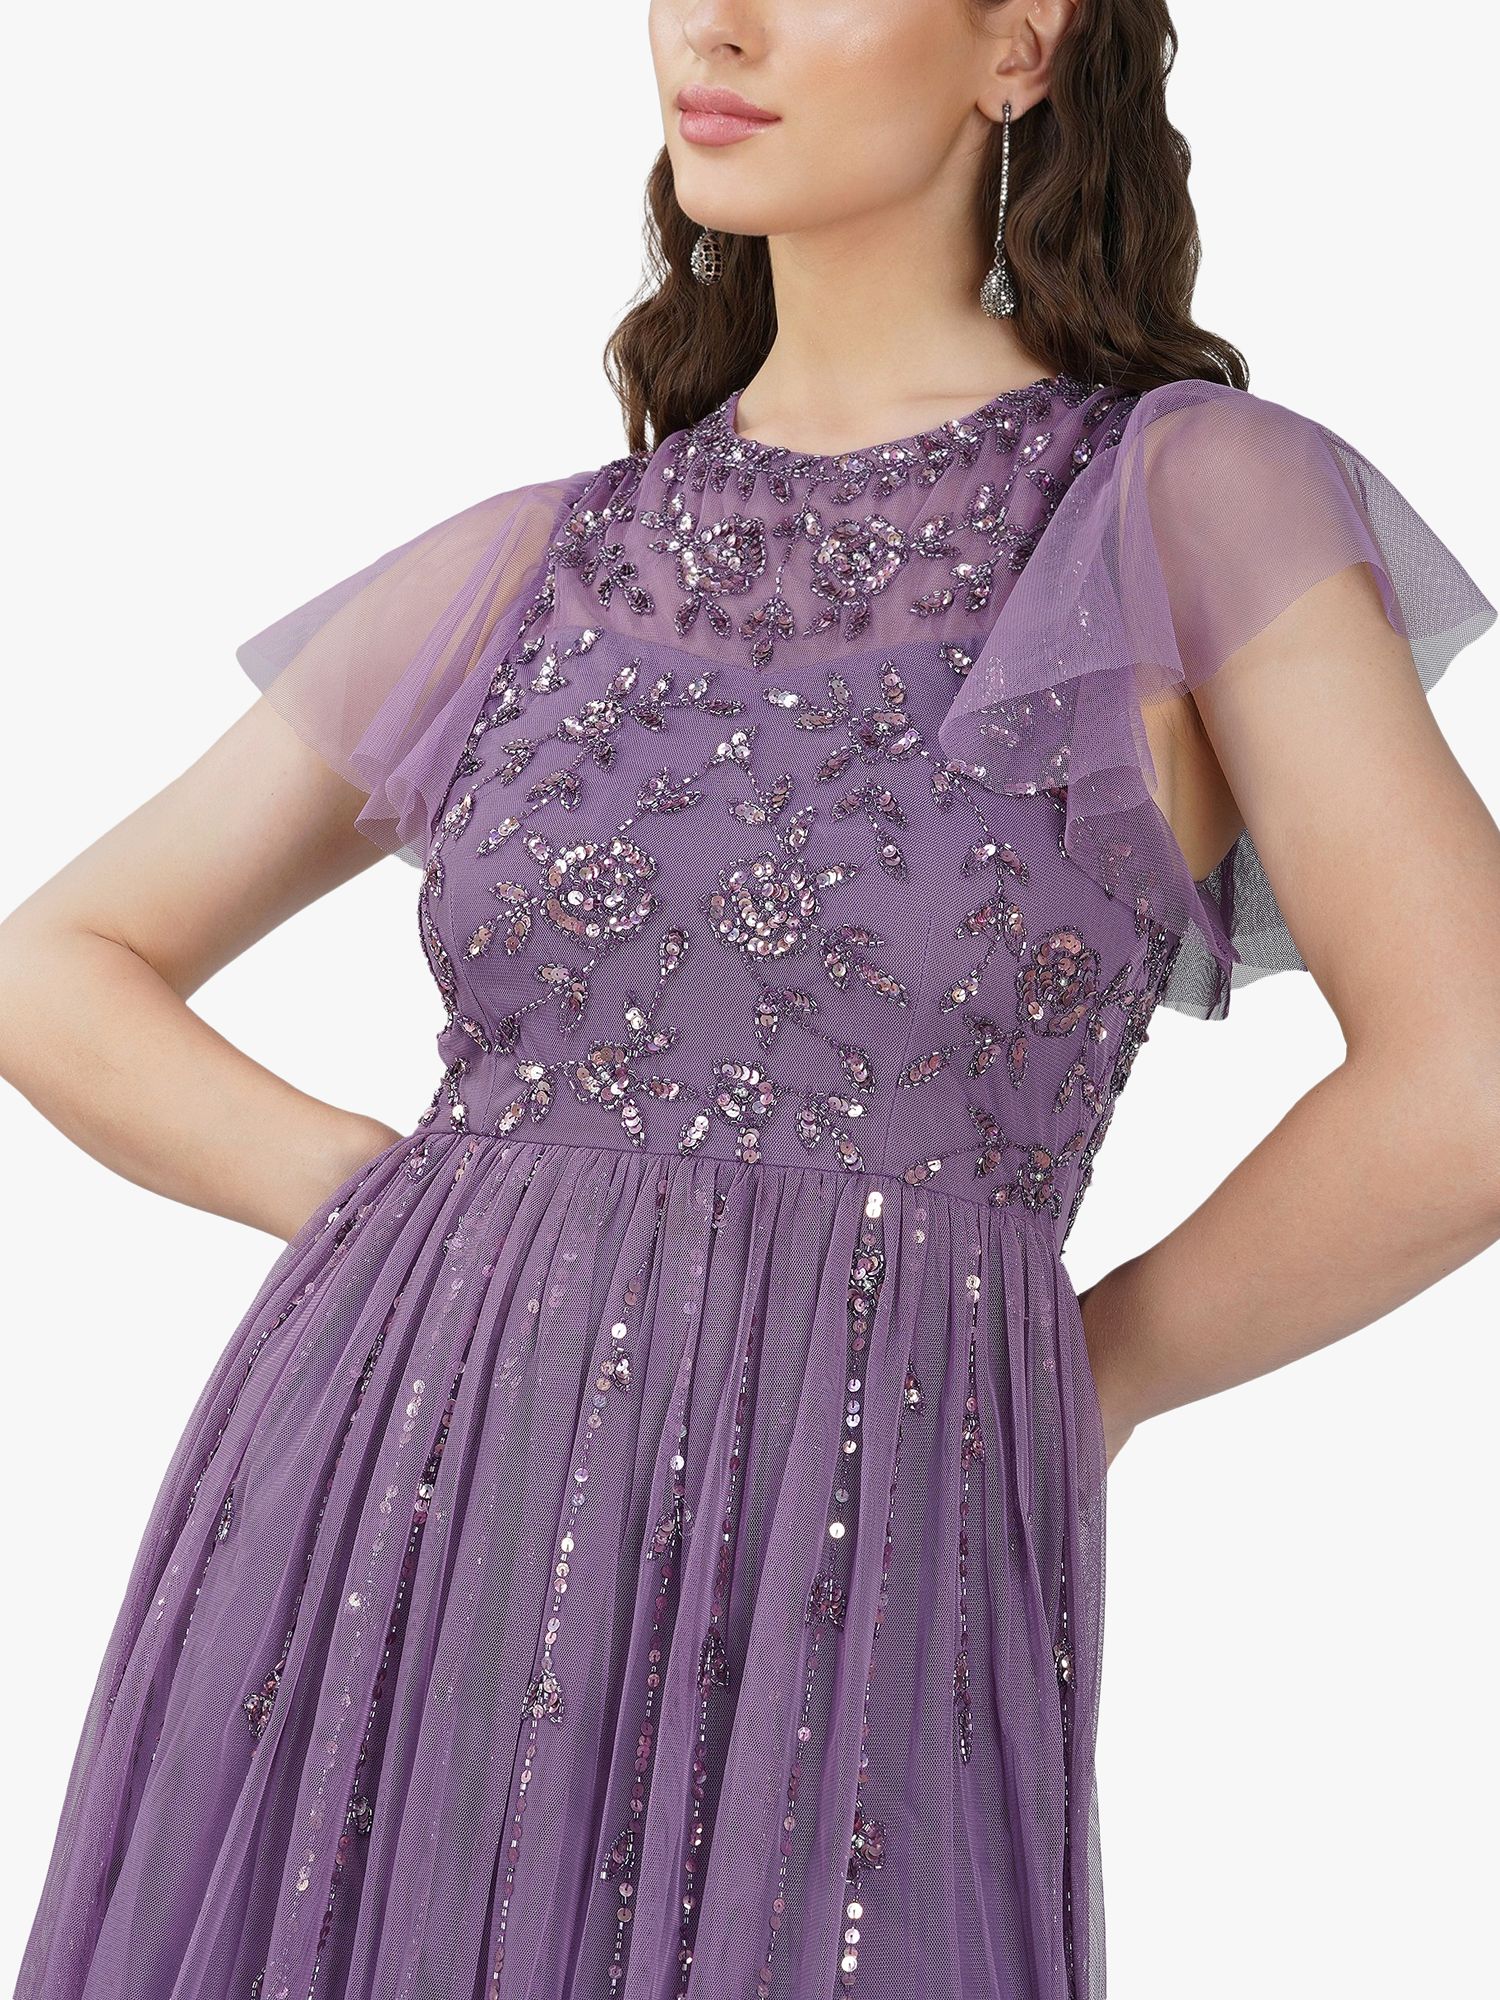 Lace & Beads Marly Embellished Maxi Dress, Purple, 10